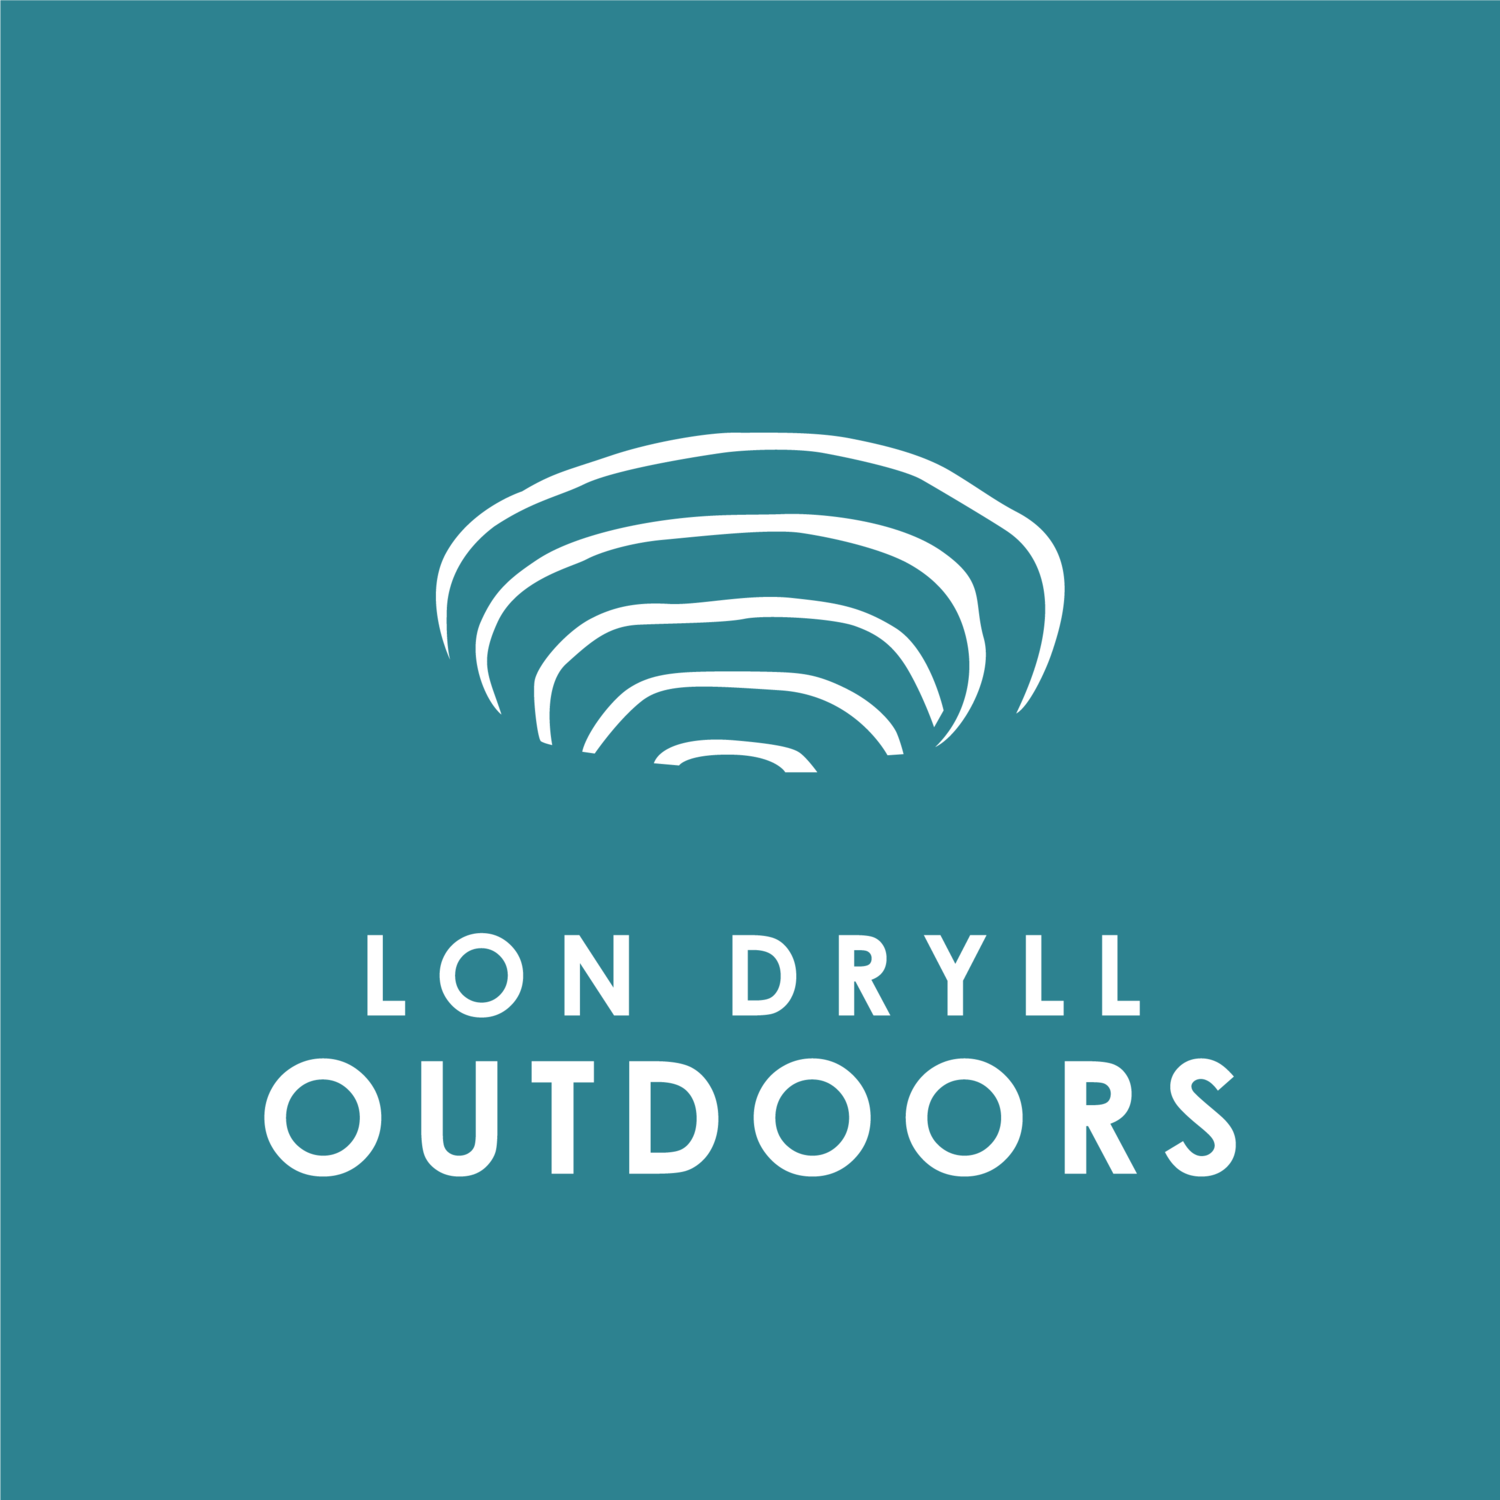 Lon Dryll Outdoors